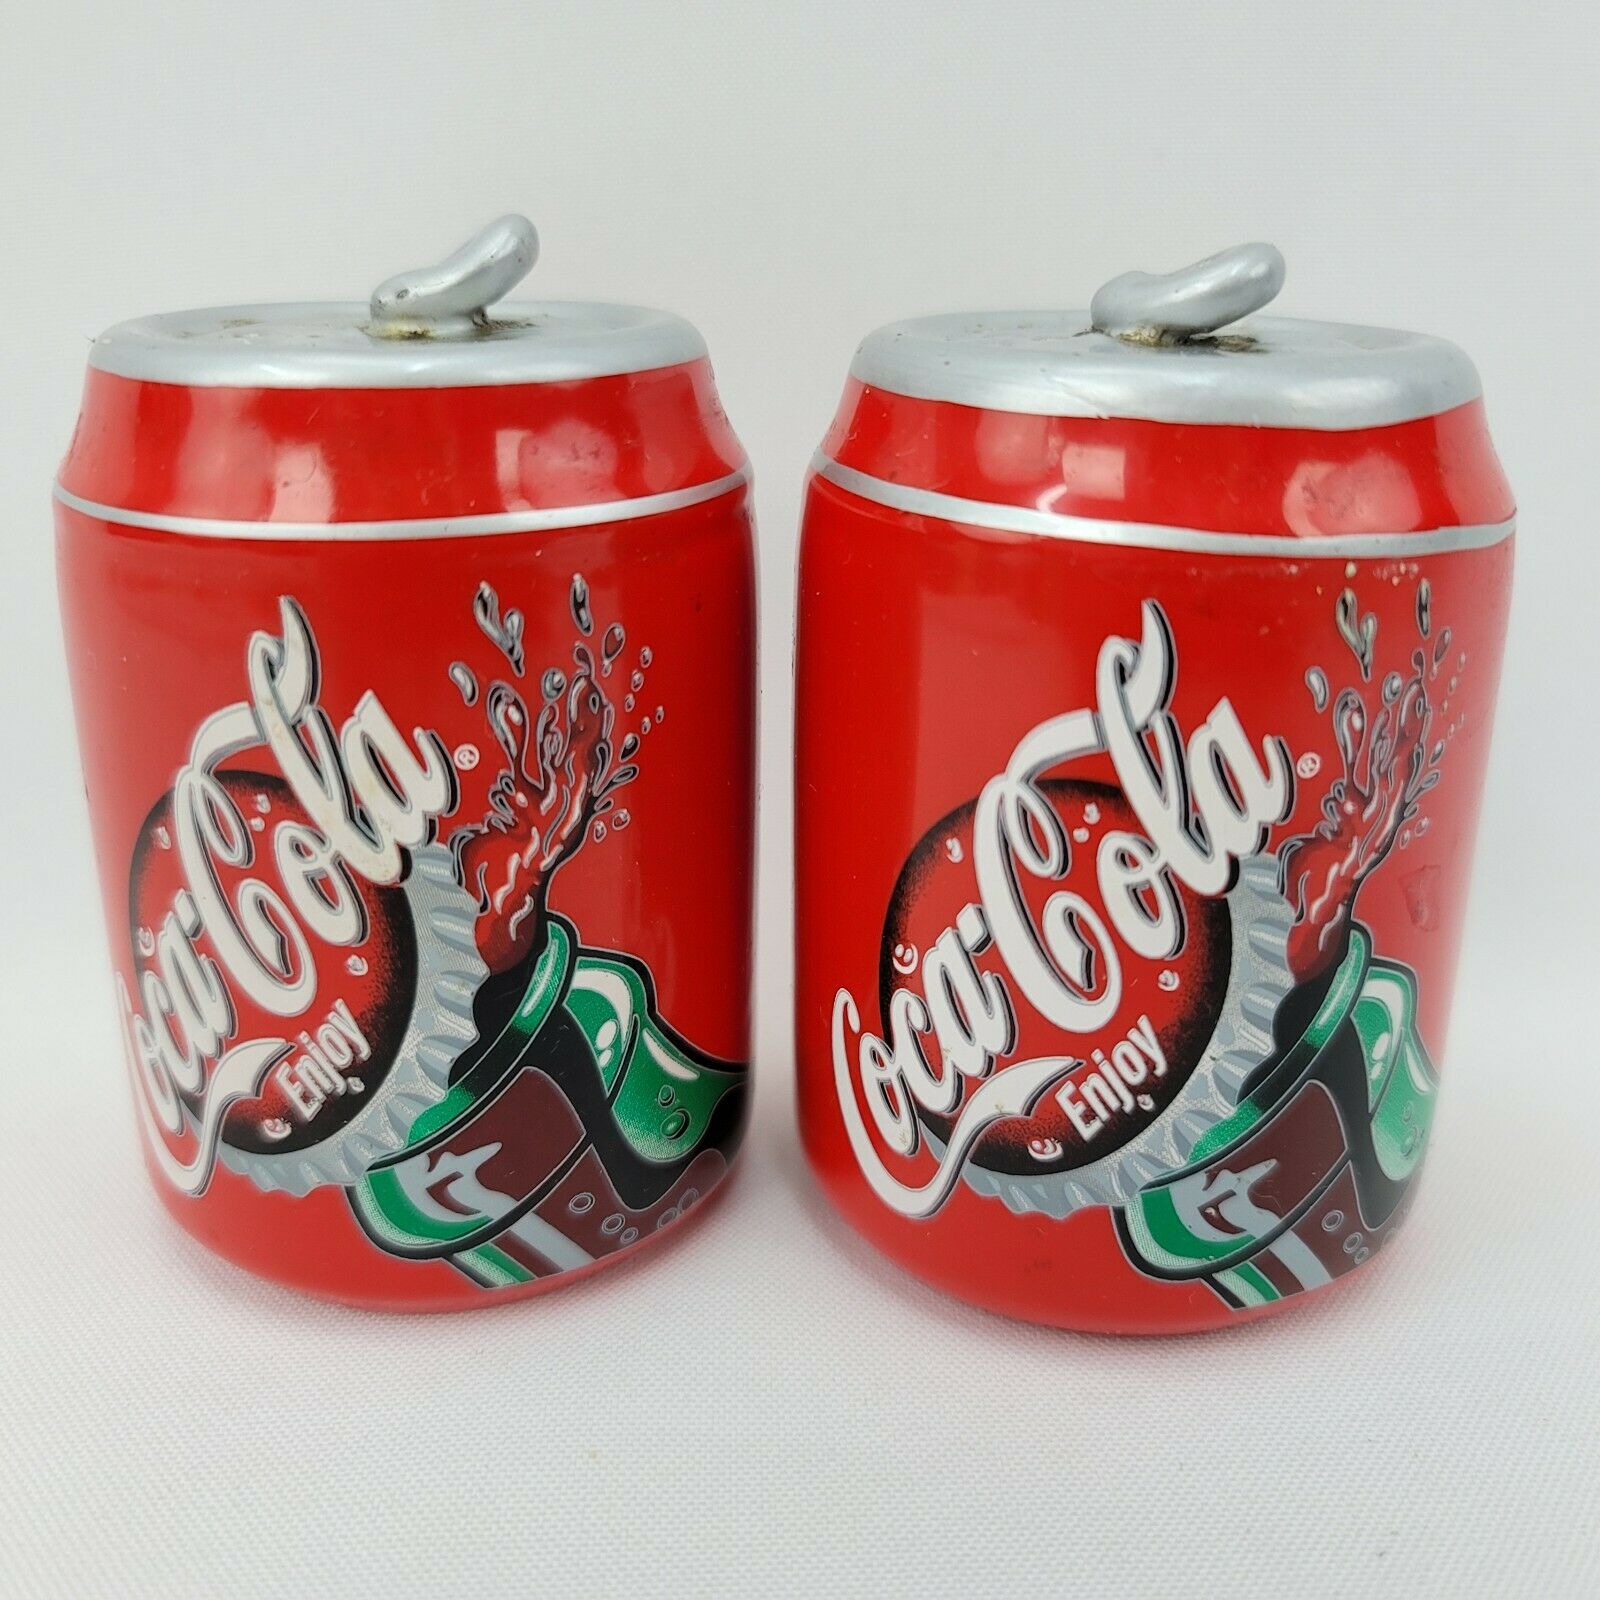 Vintage 1999 Coca Cola Enjoy Coke Ceramic 3.5" Cans Salt And & Pepper Shakers